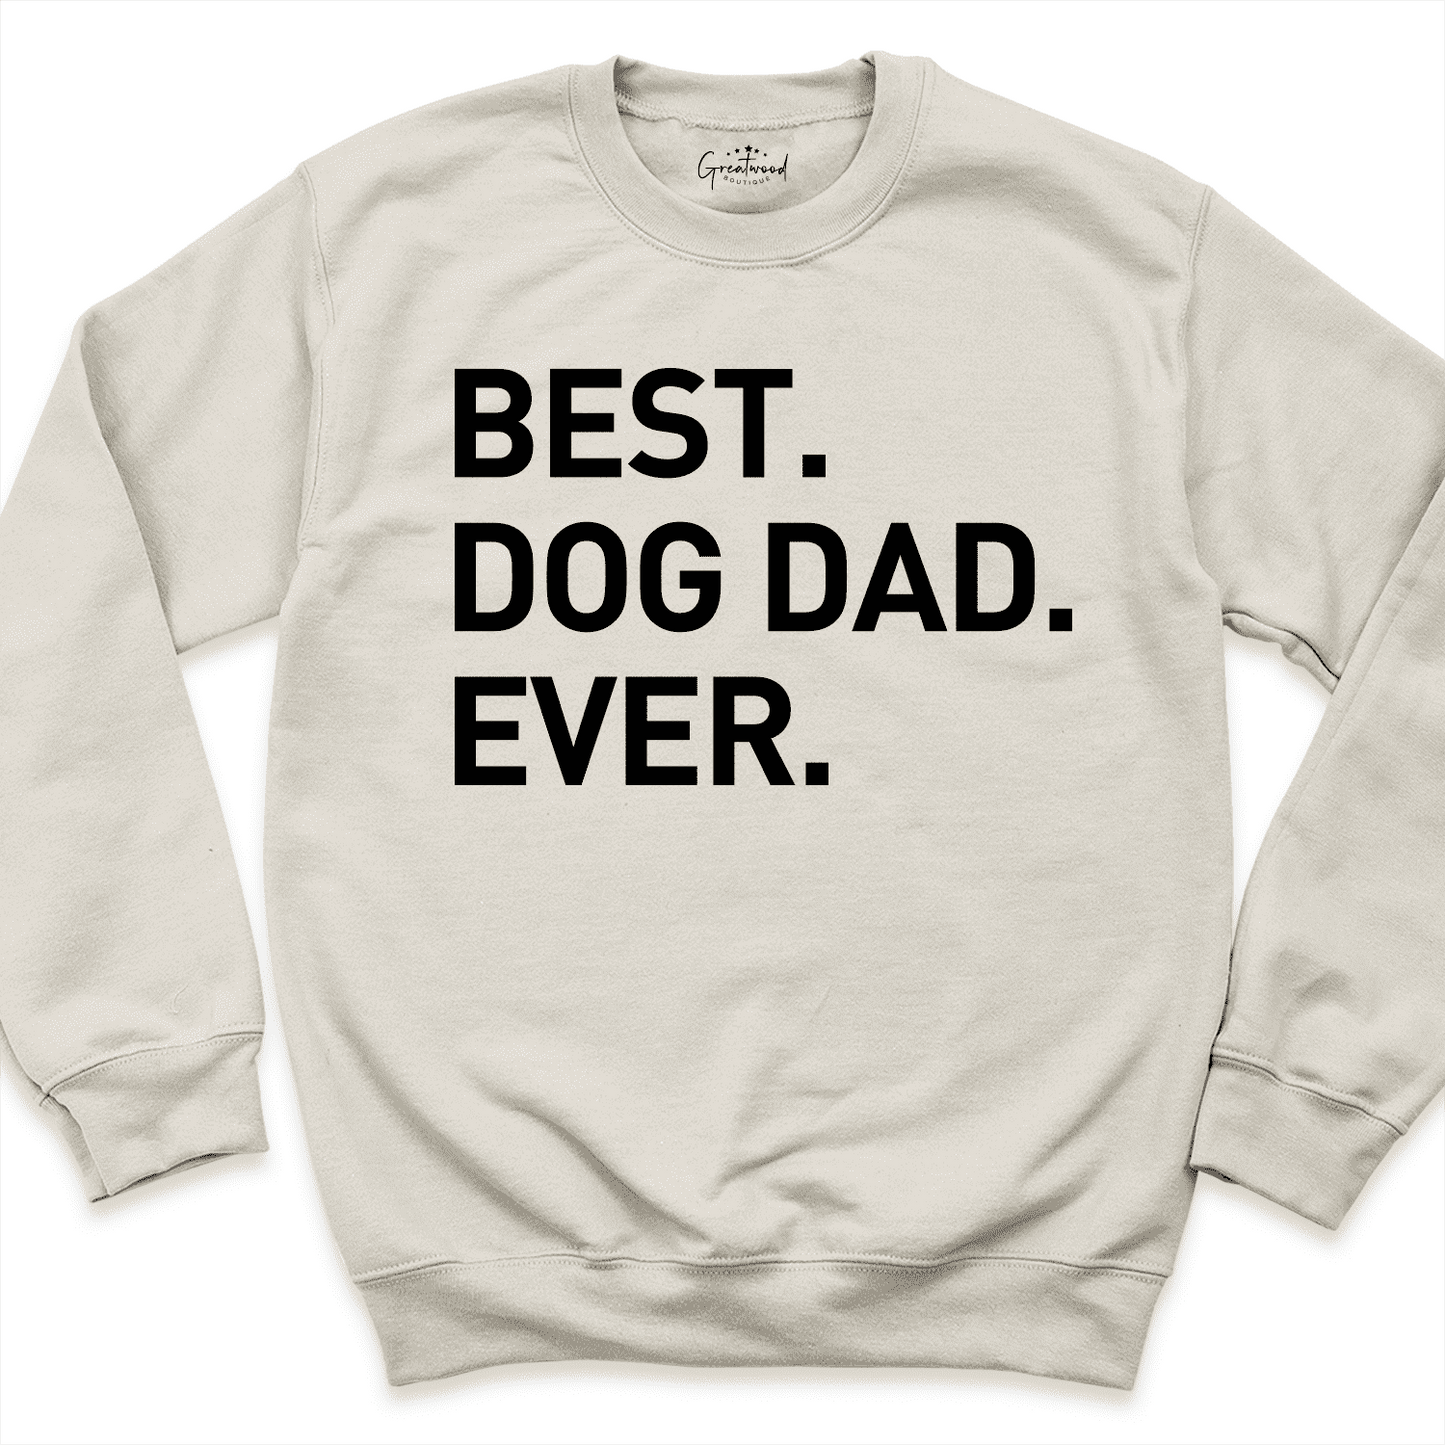 Best Dog Dad Ever Shirt Sand - greatwood boutique